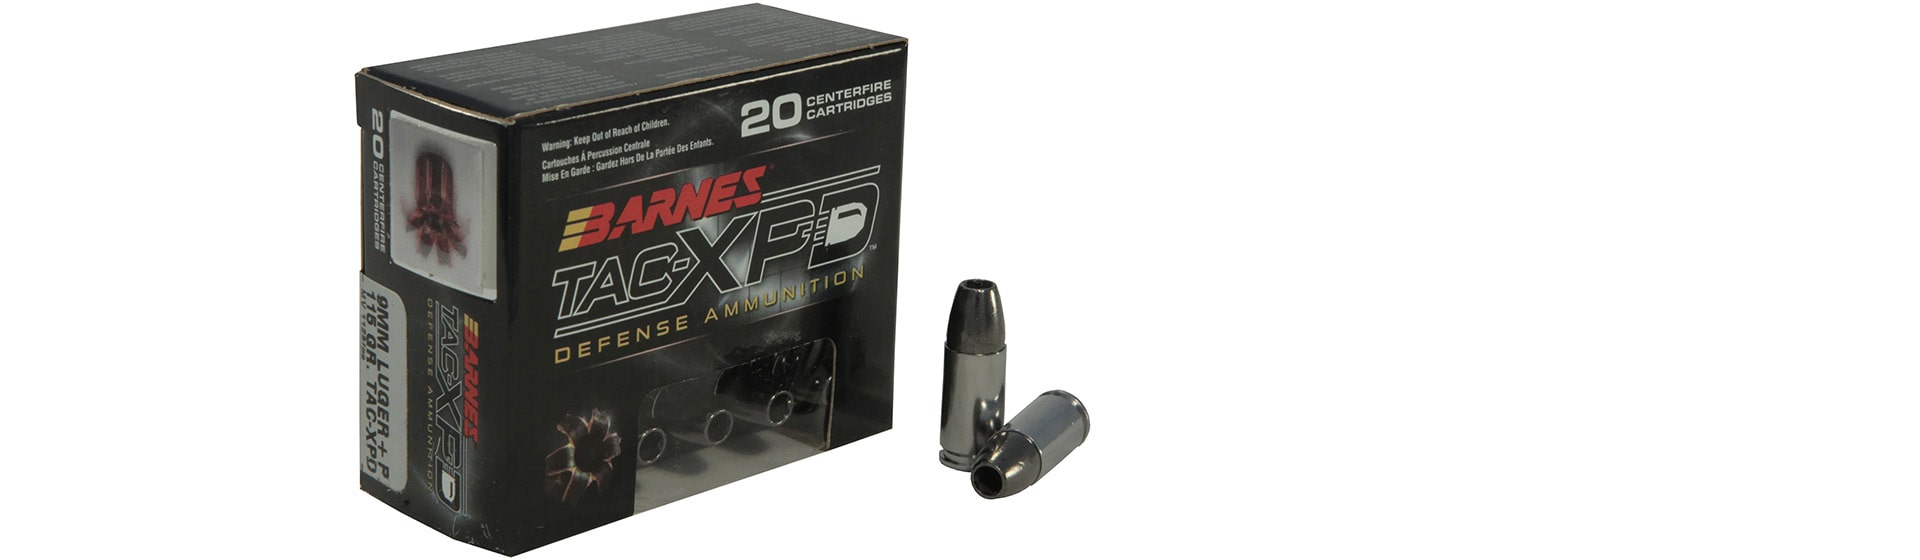 Barnes Tac-XP 9mm Ammo